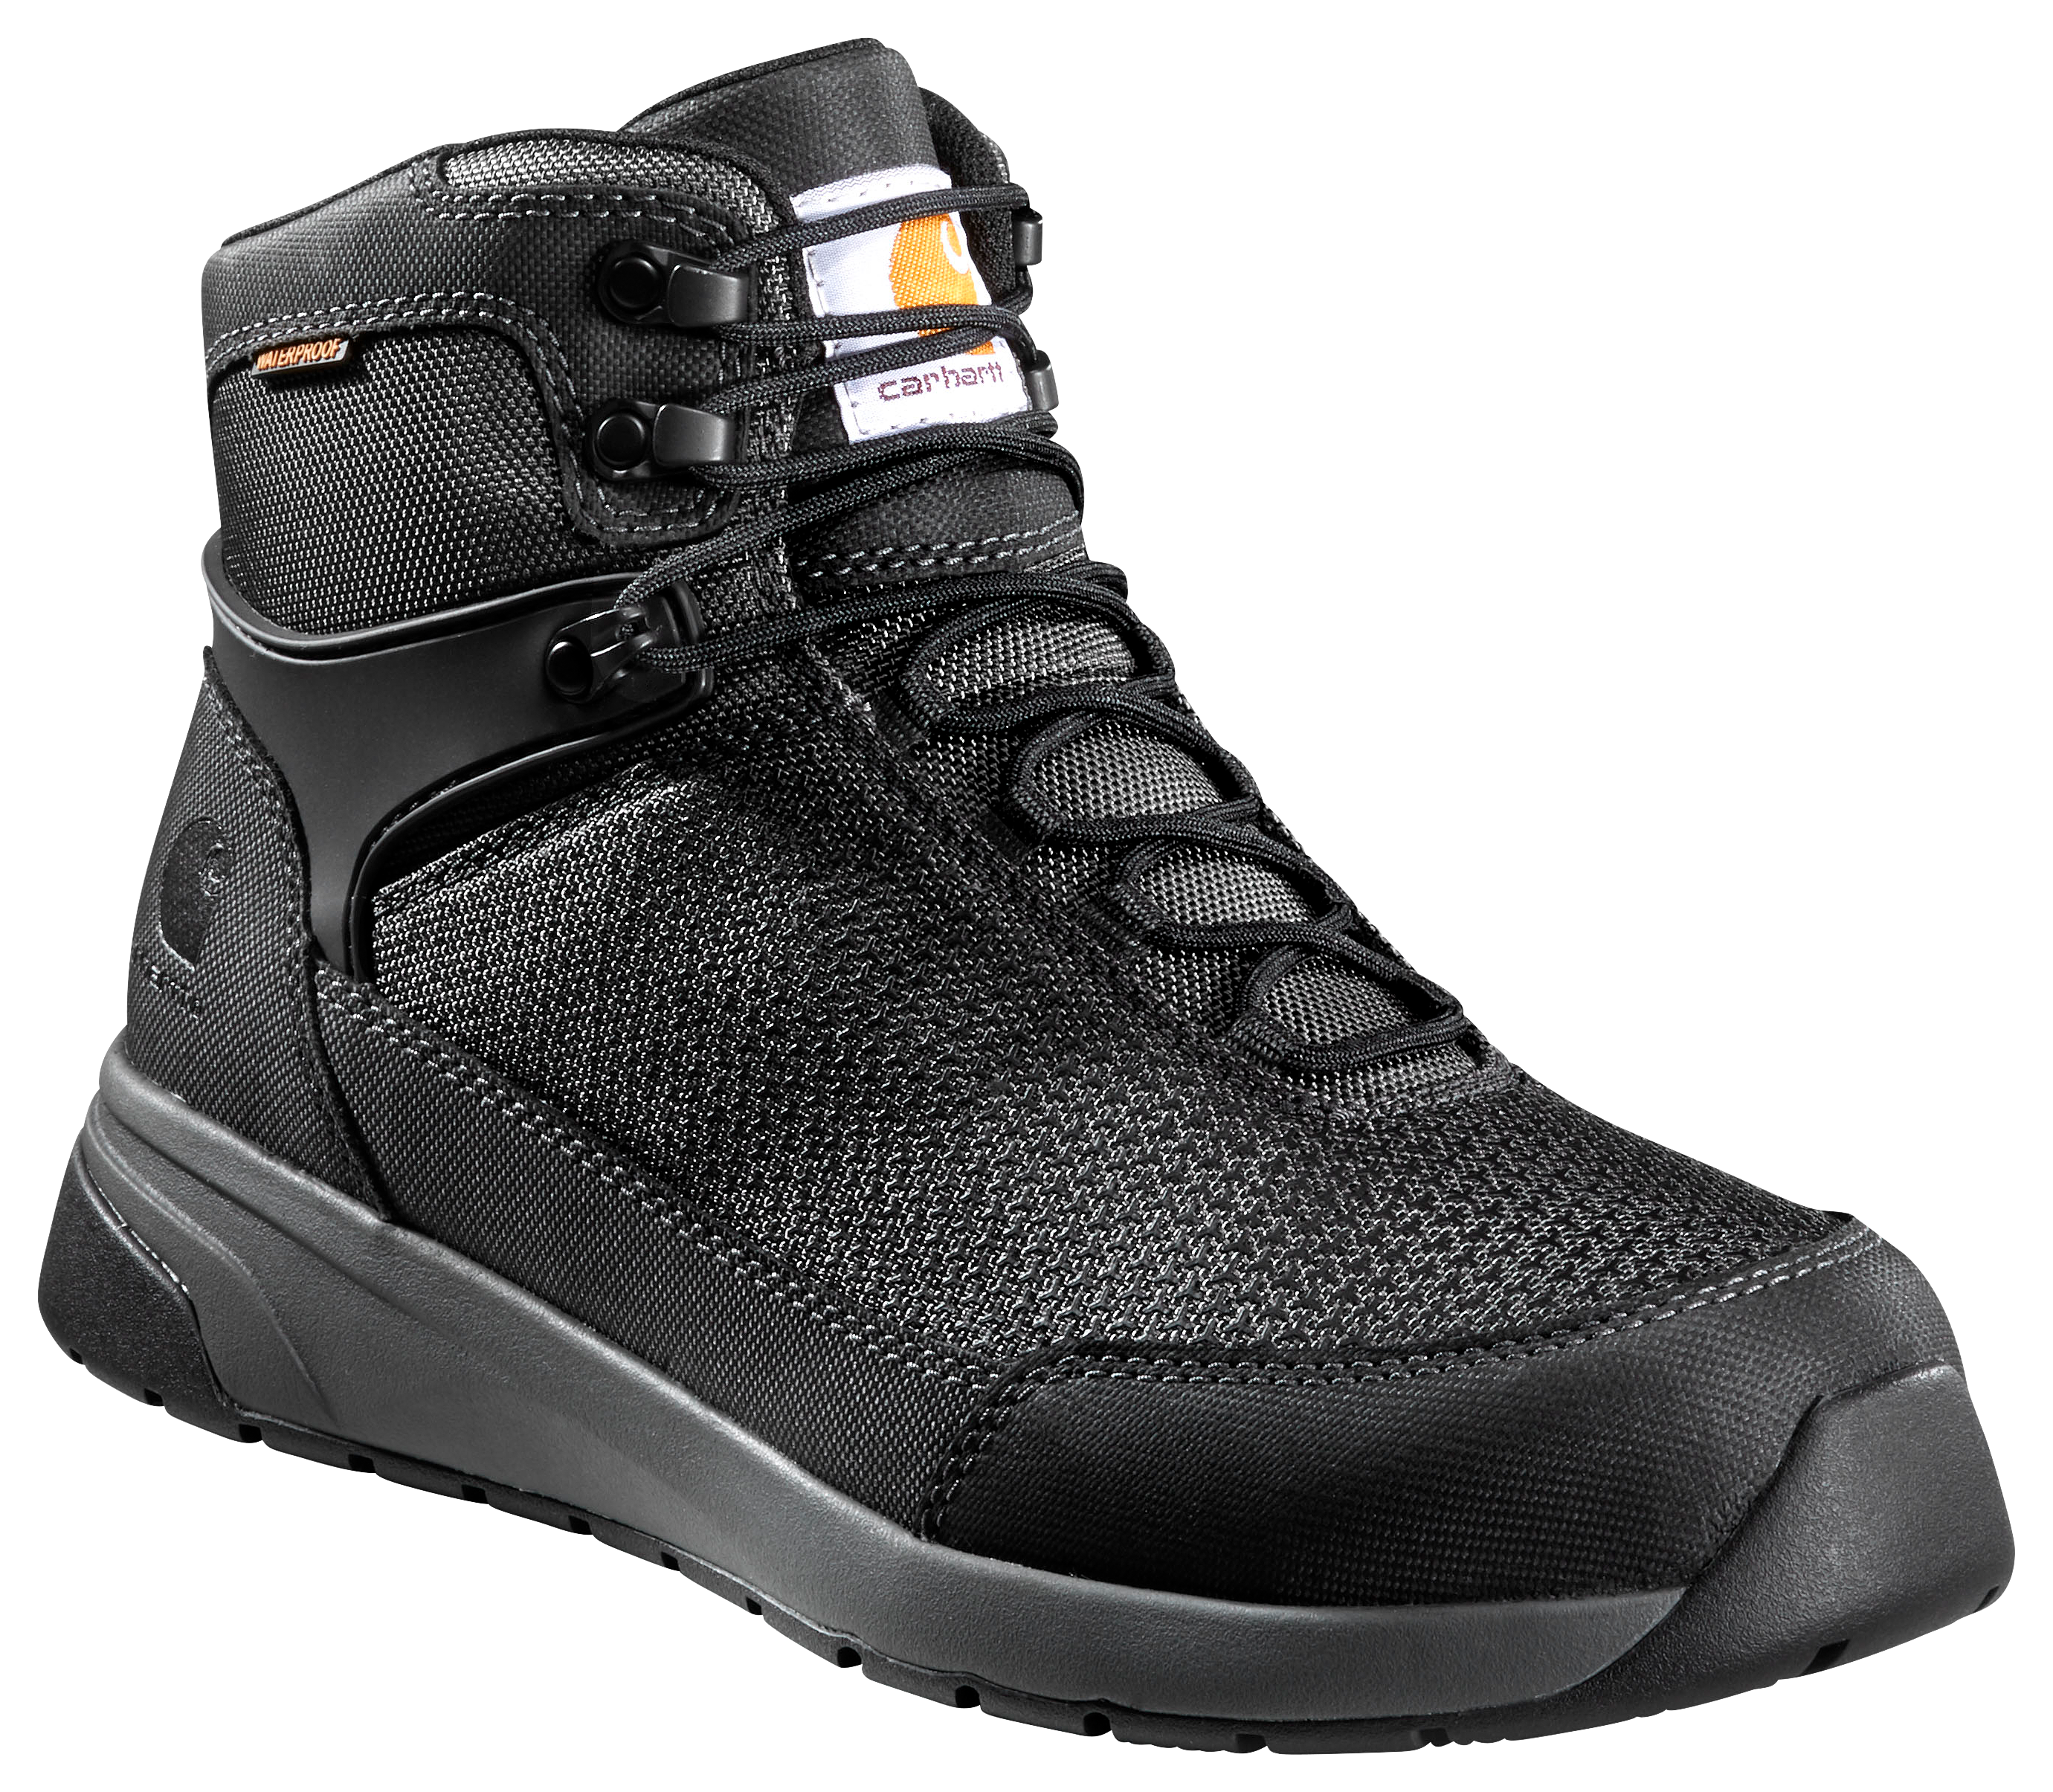 Carhartt Force 6"" Nano Composite-Toe Work Boots for Men - Black - 8.5W